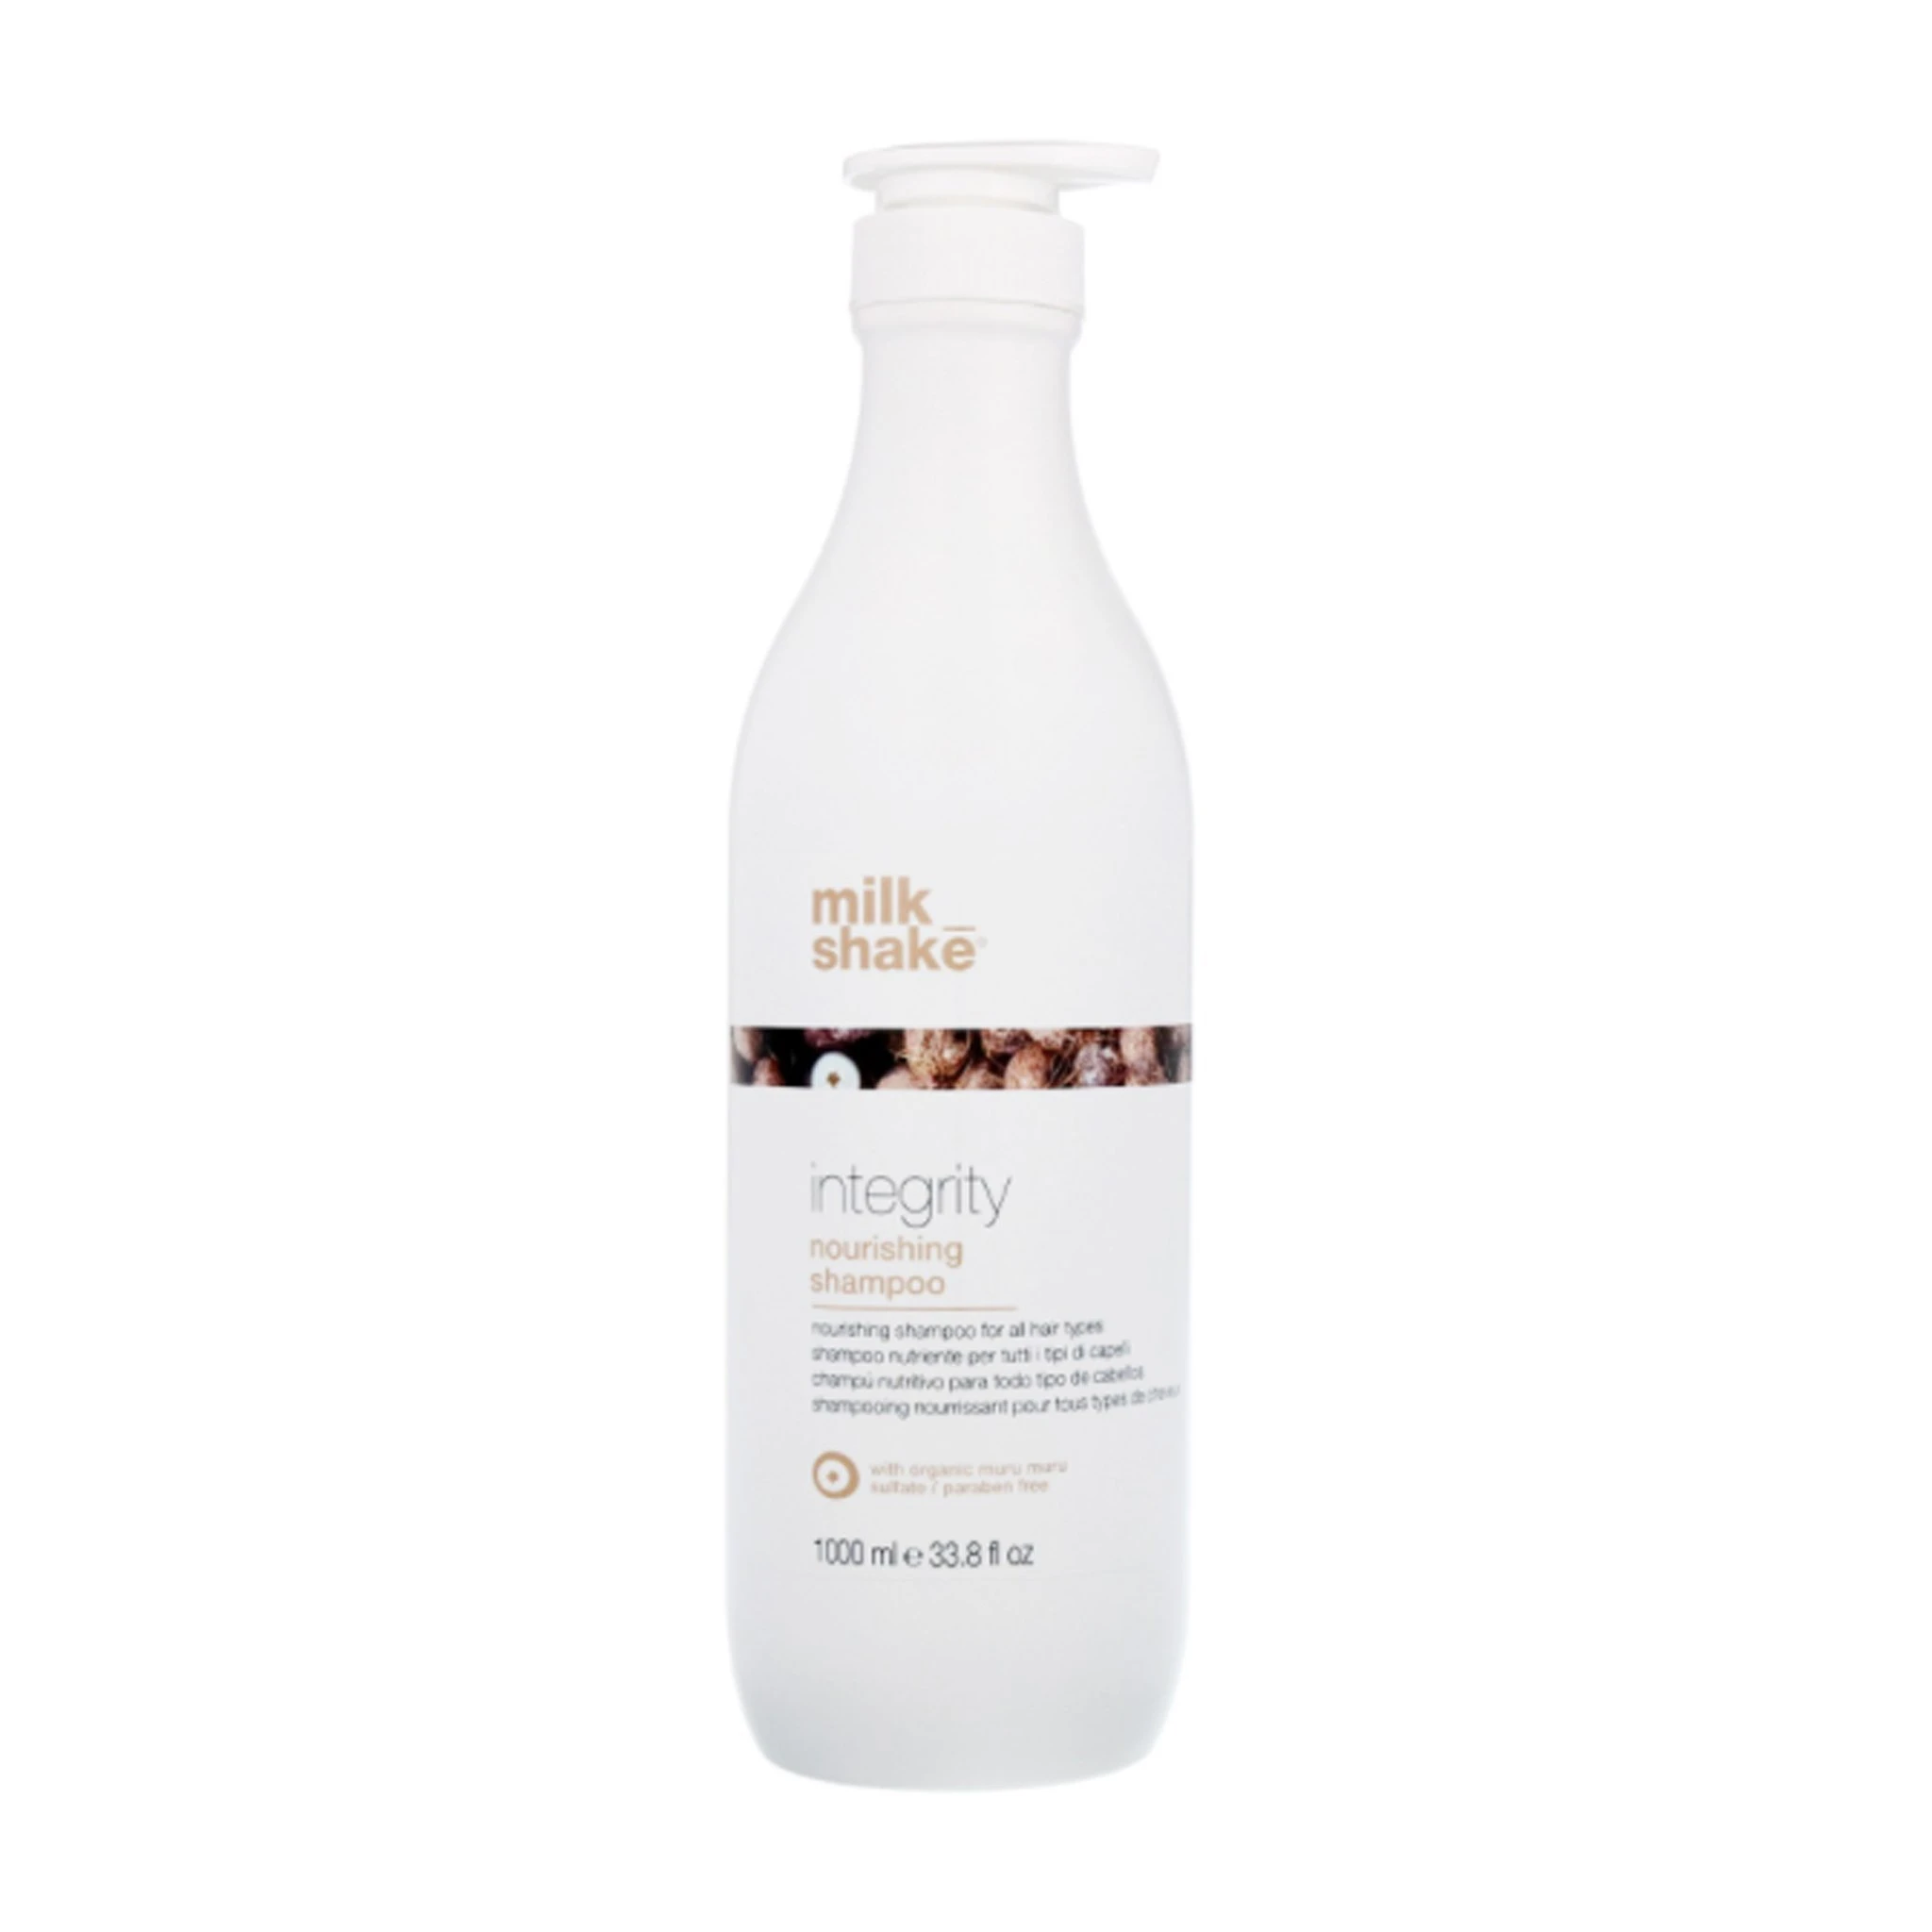 Milkshake integrity nourishing shampoo 1 Litre